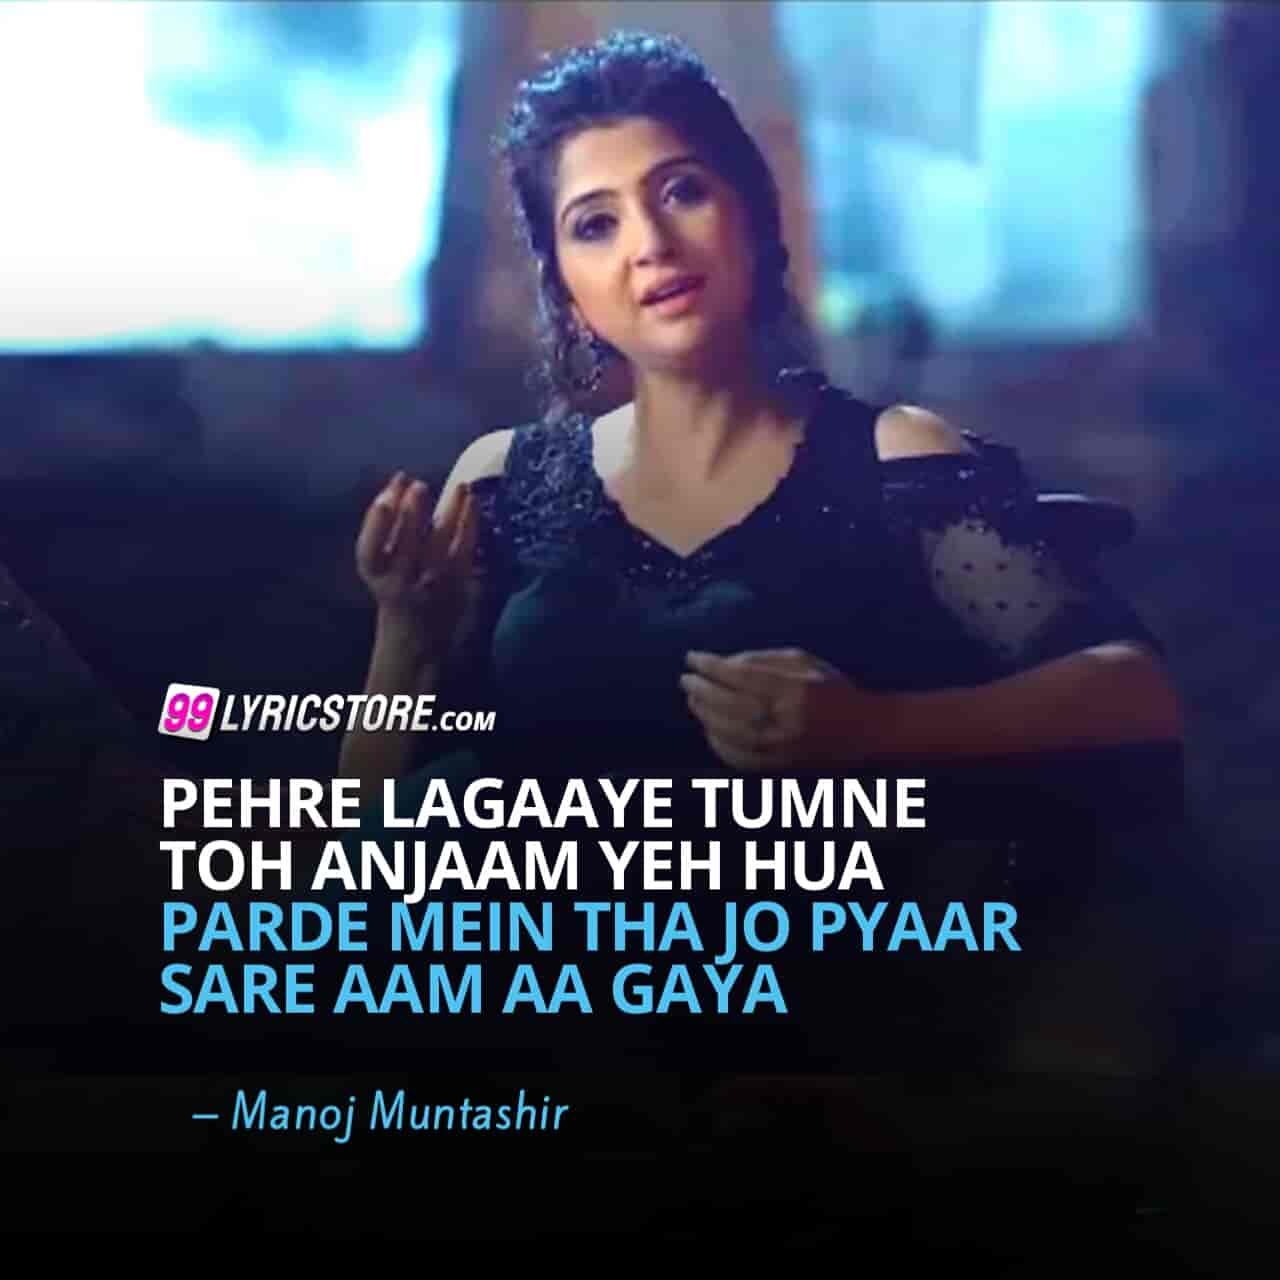 Beautiful Lyrics Of Hindi Songs - Lyrics Collection